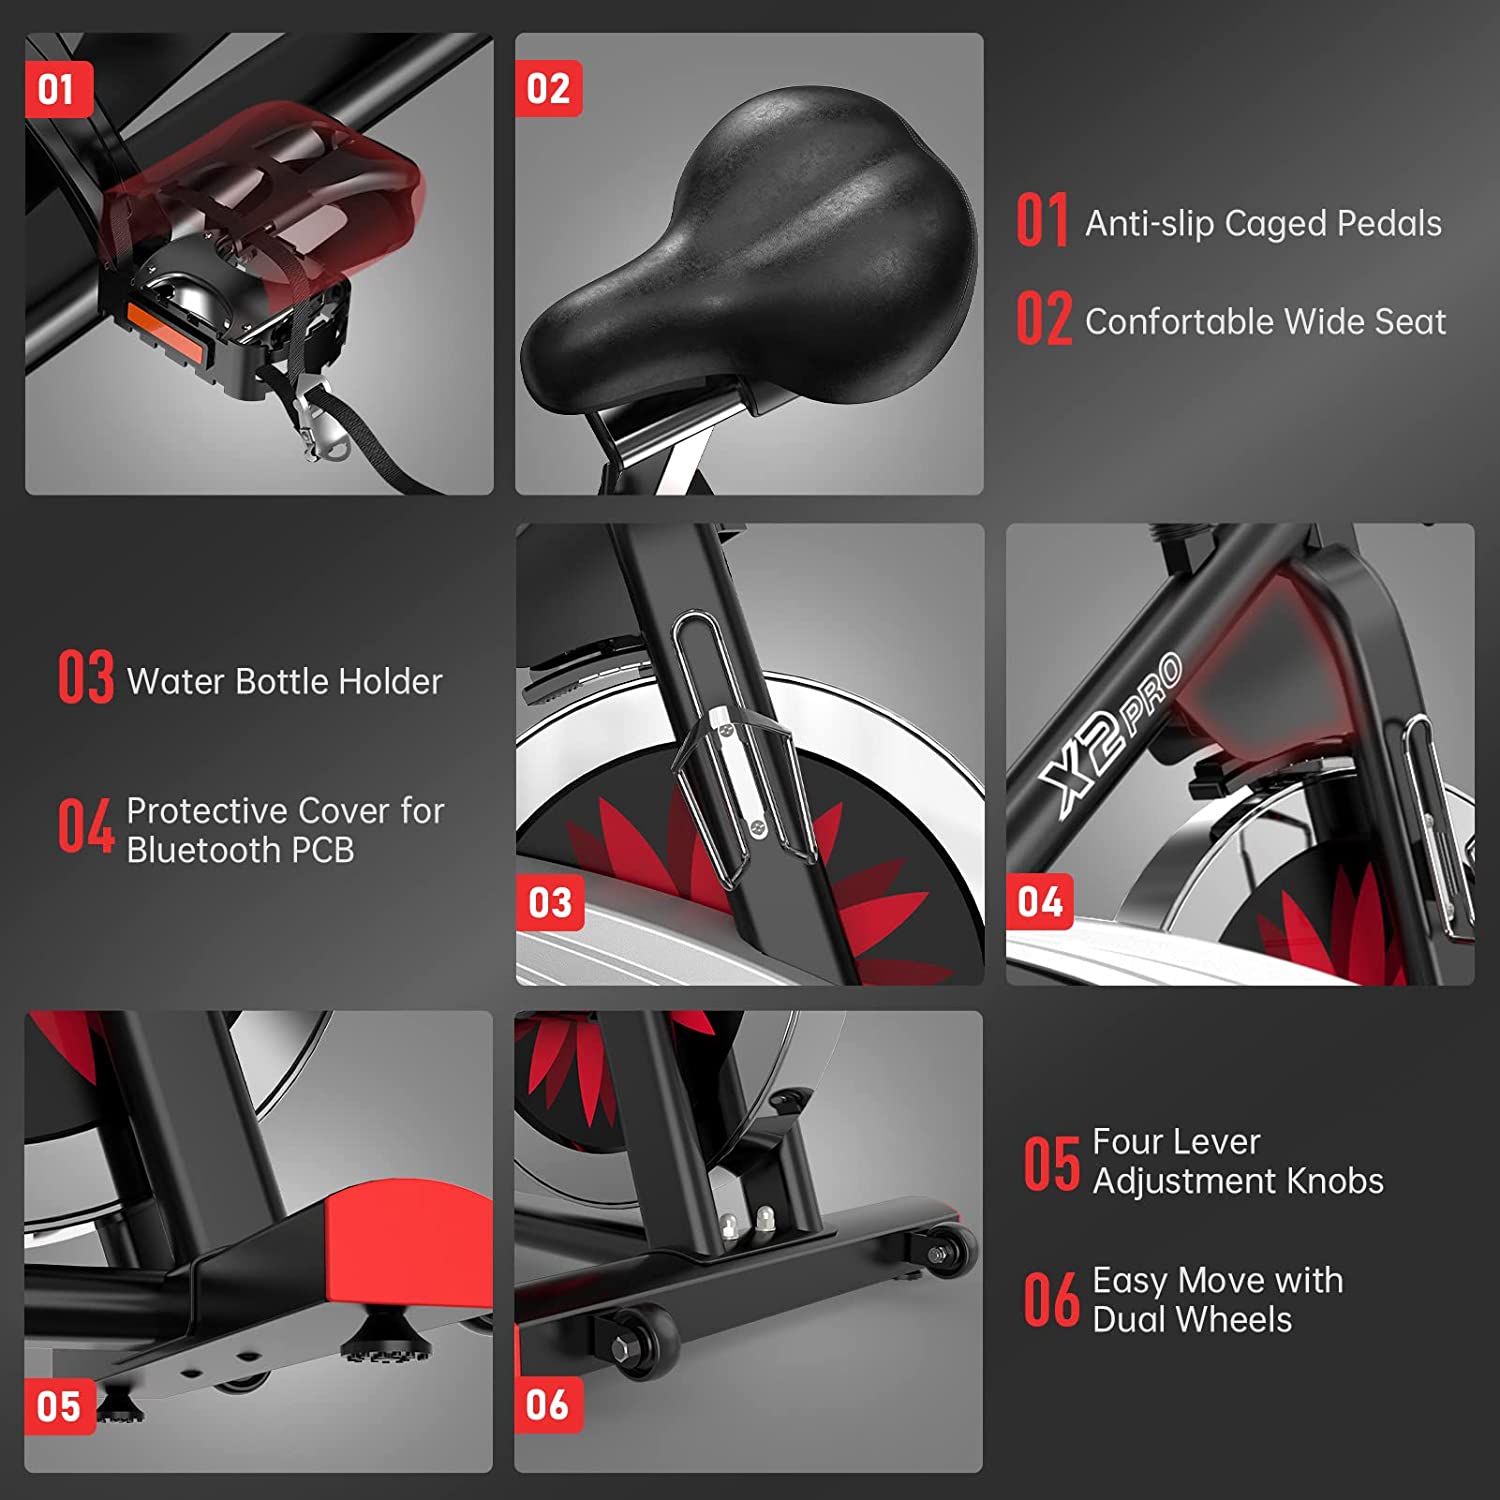 Recumbent Bike Seat Cushion - Anti Slip Large Exercise Bike Seat Cushion Pad - Ideal Recumbent Bike Cushion Fits All Recumbent Exercise Bike